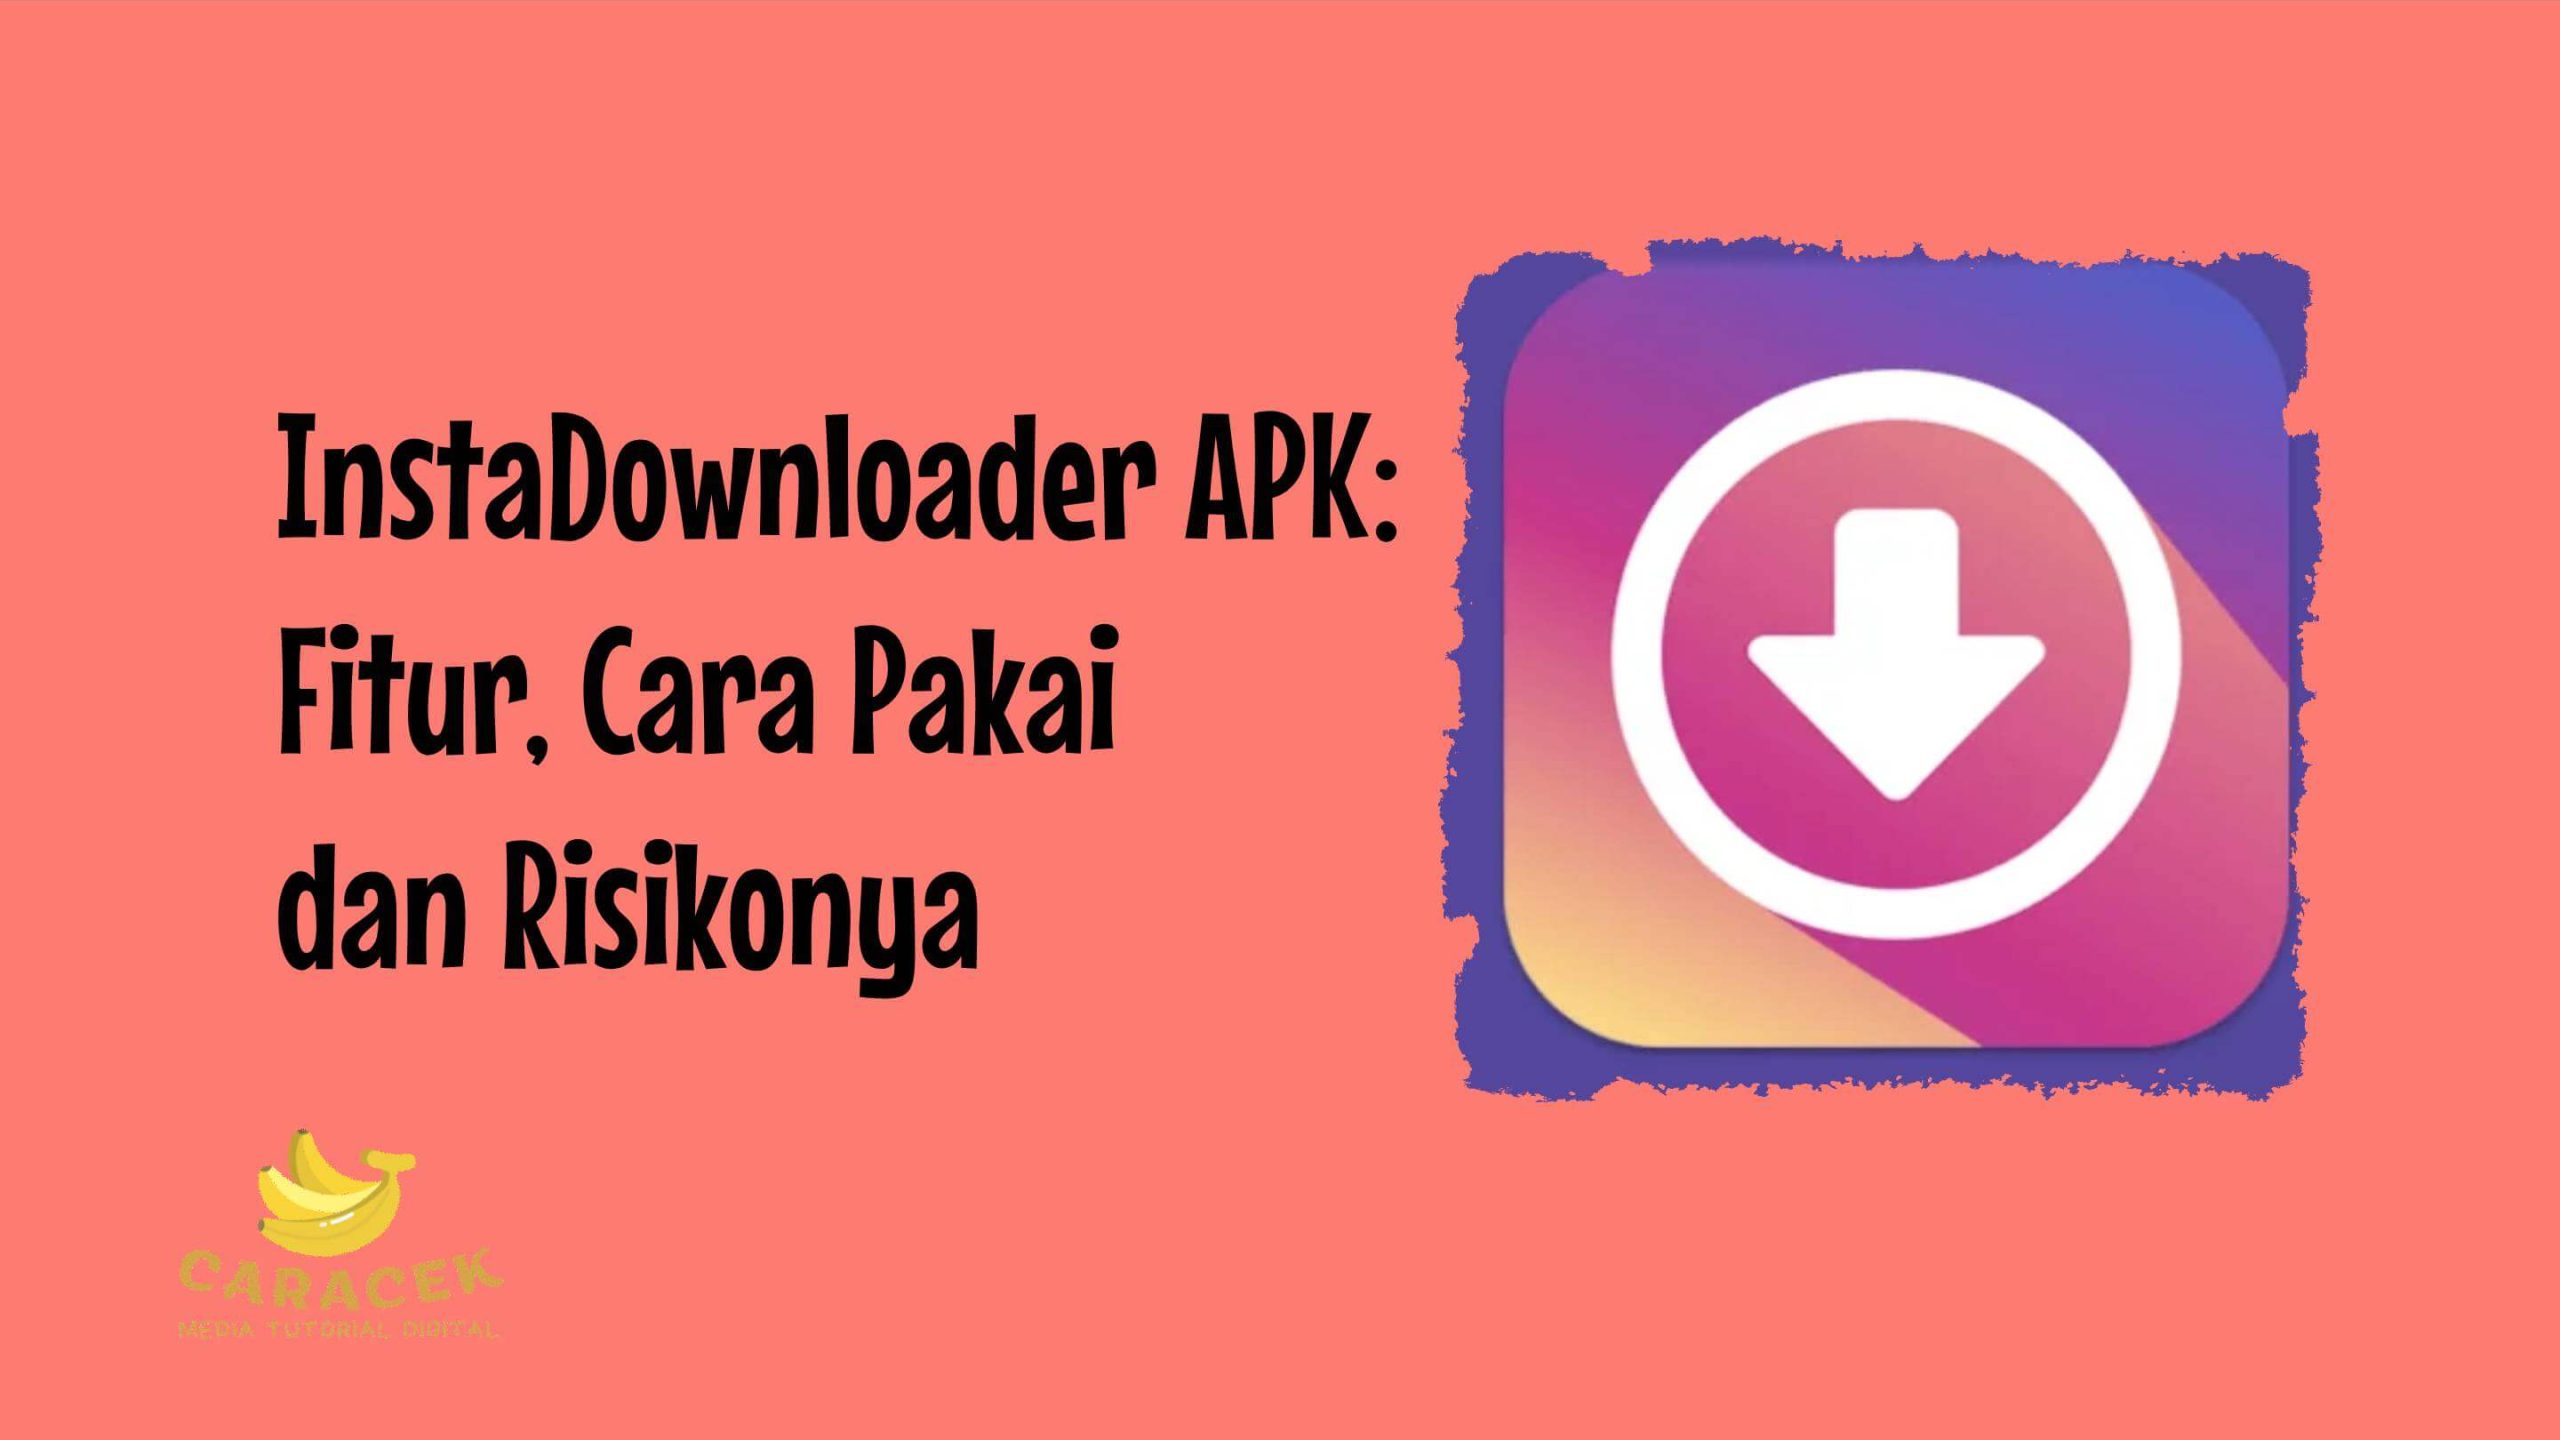 InstaDownloader APK